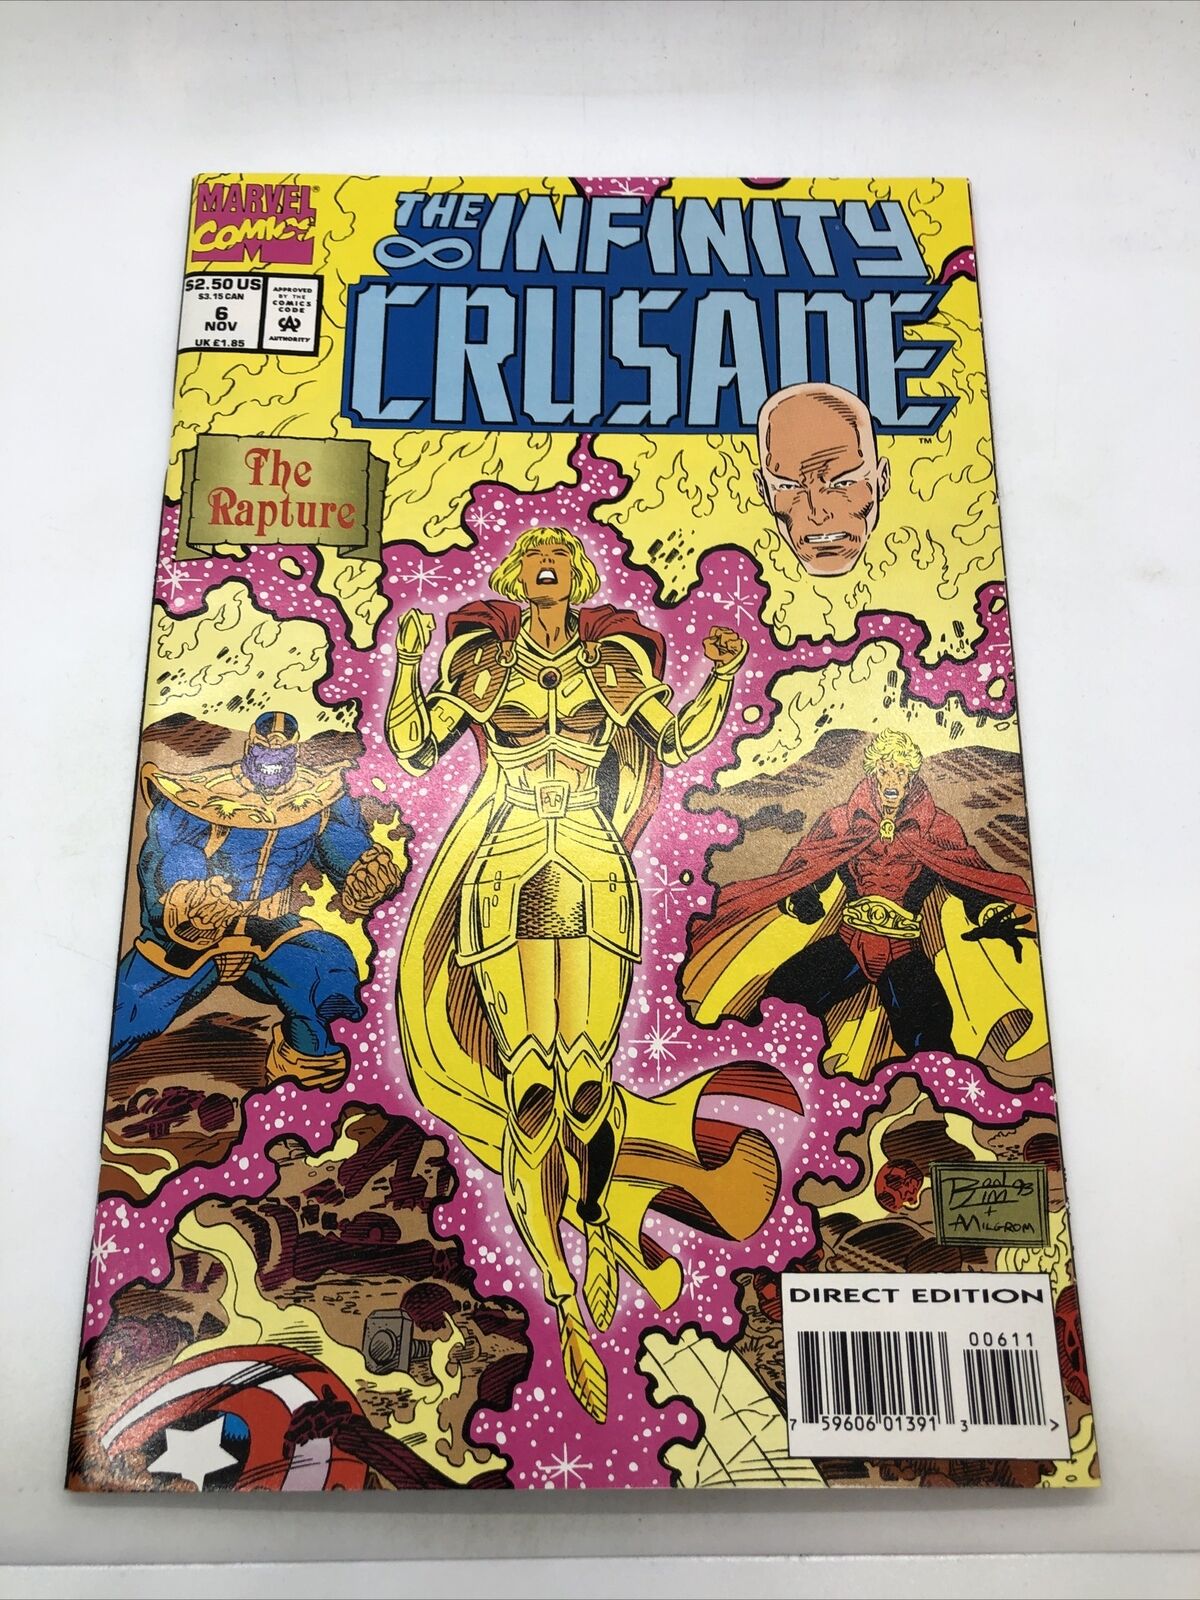 The Infinity Crusade: The rapture #6 Marvel Comics (Nov1993)